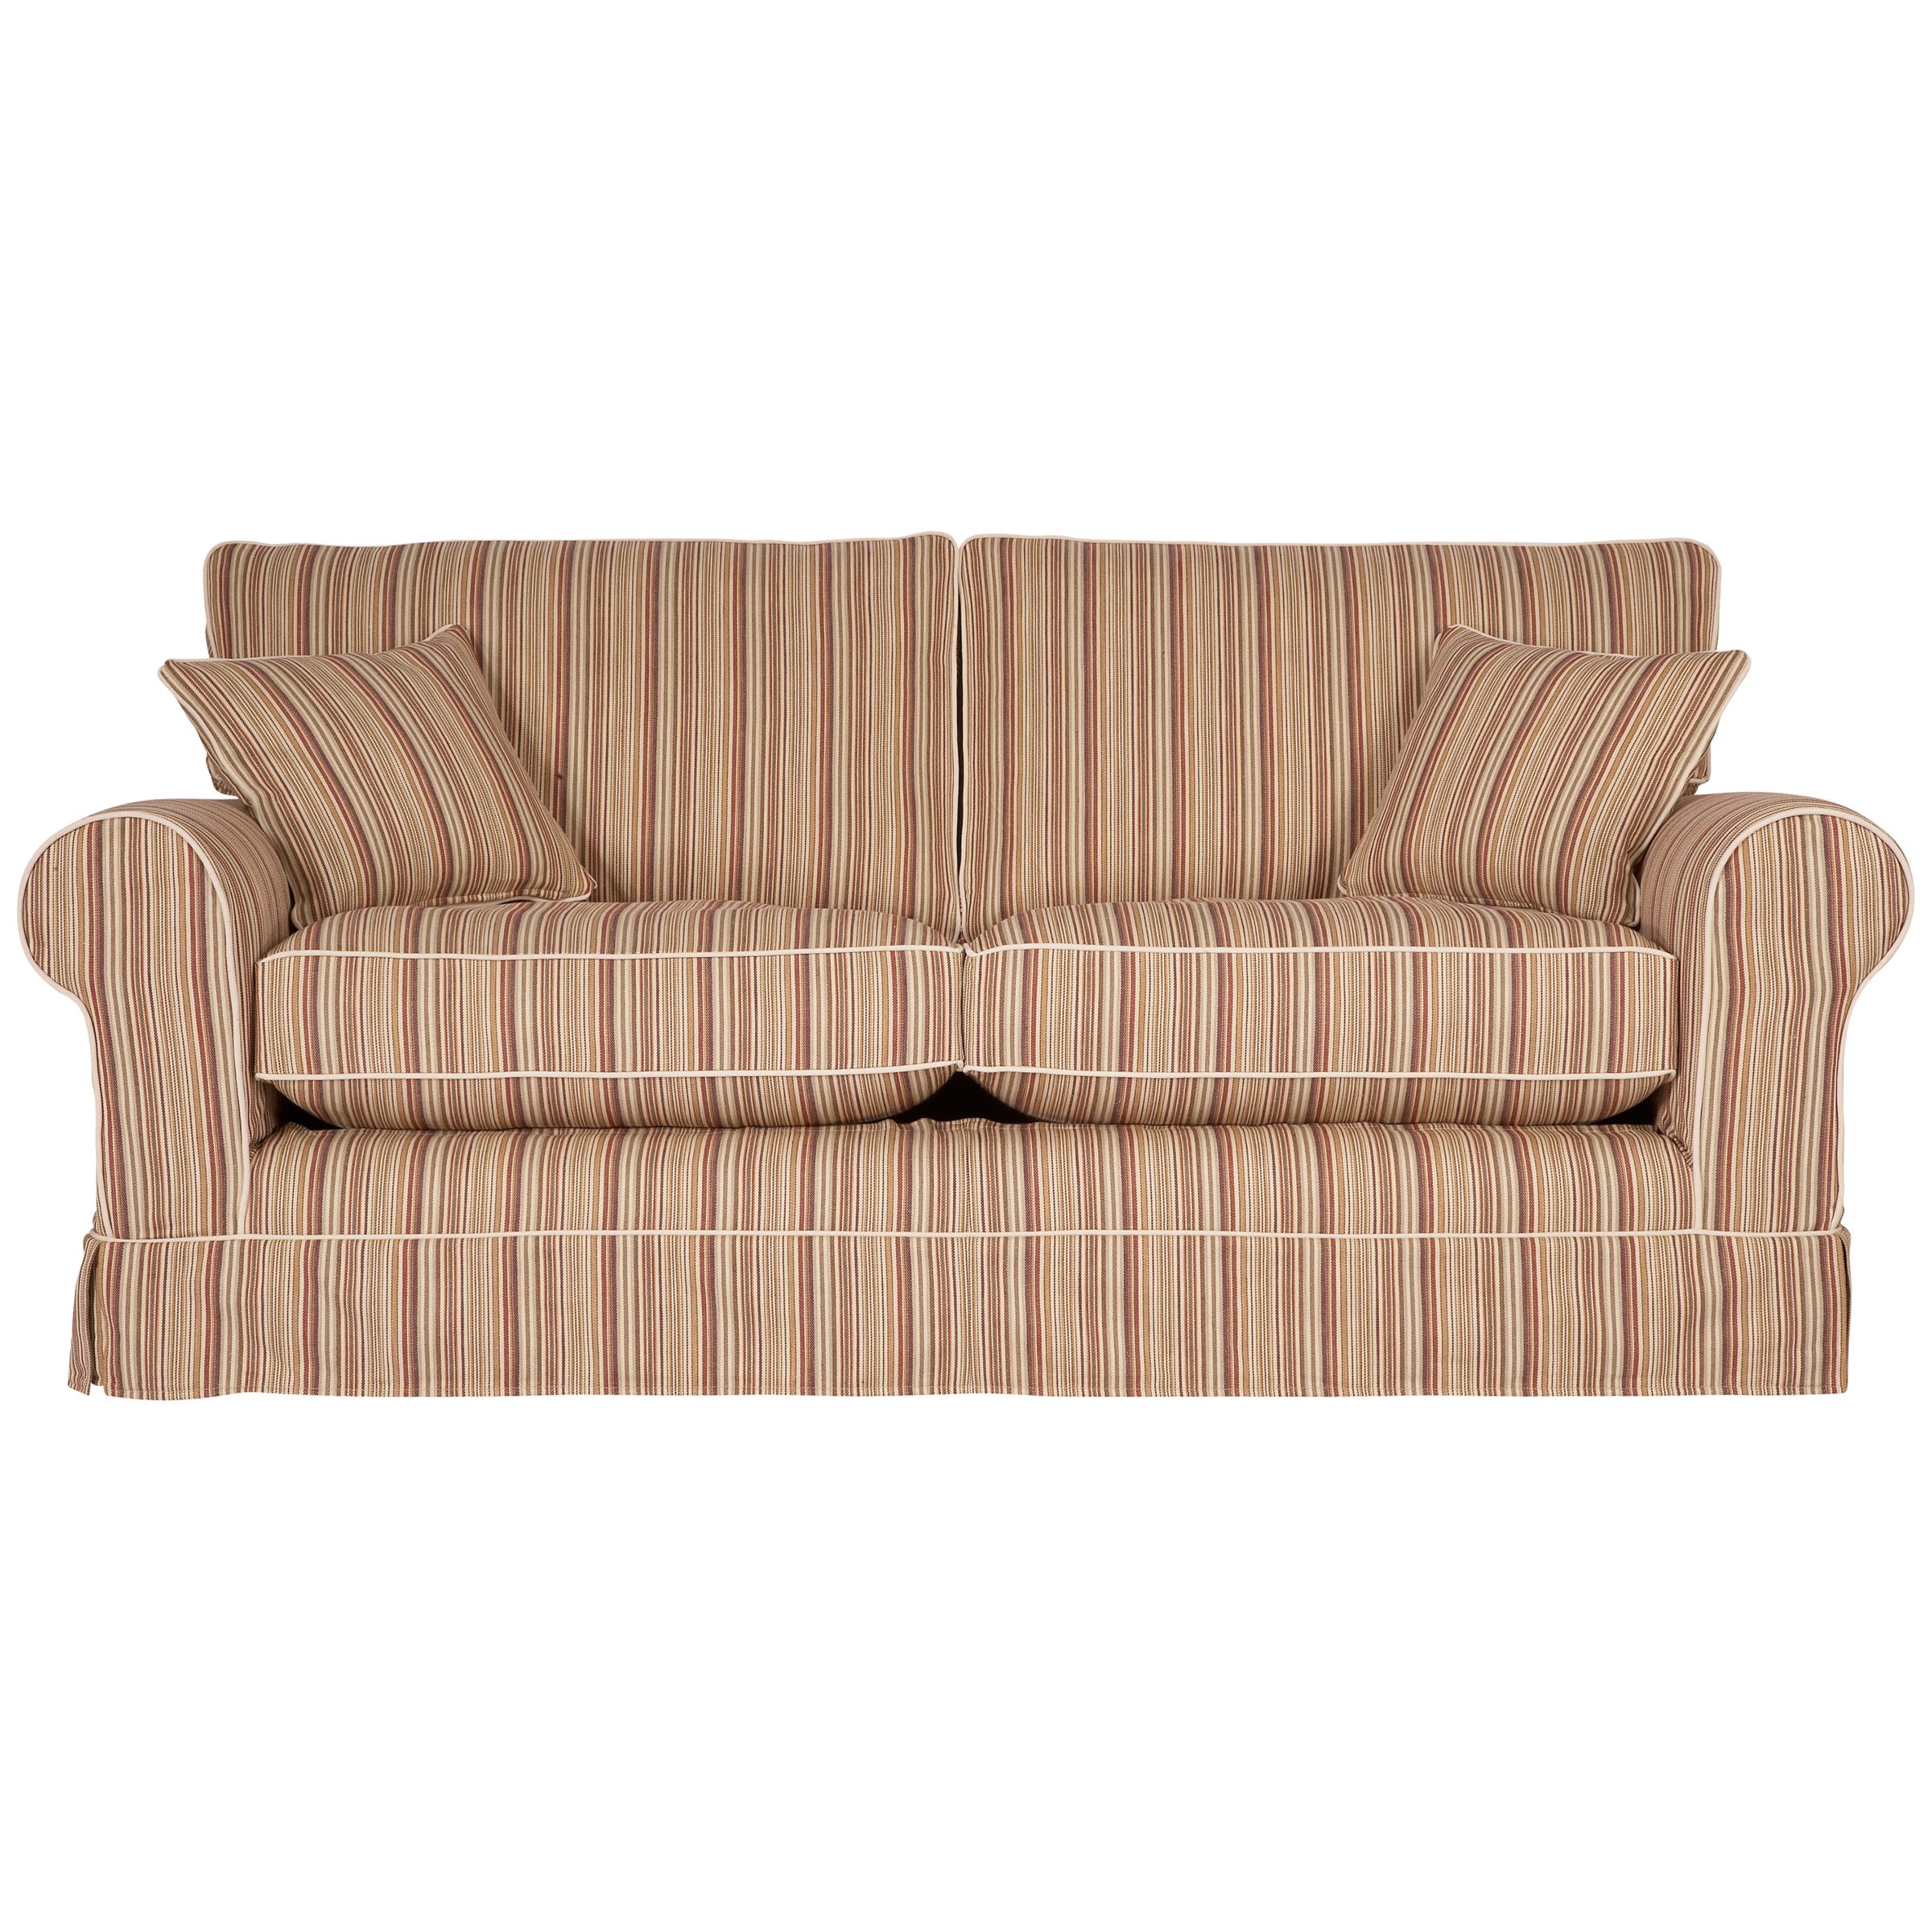 John Lewis Padstow Large Sofa, Marcello Stripe, width 204cm